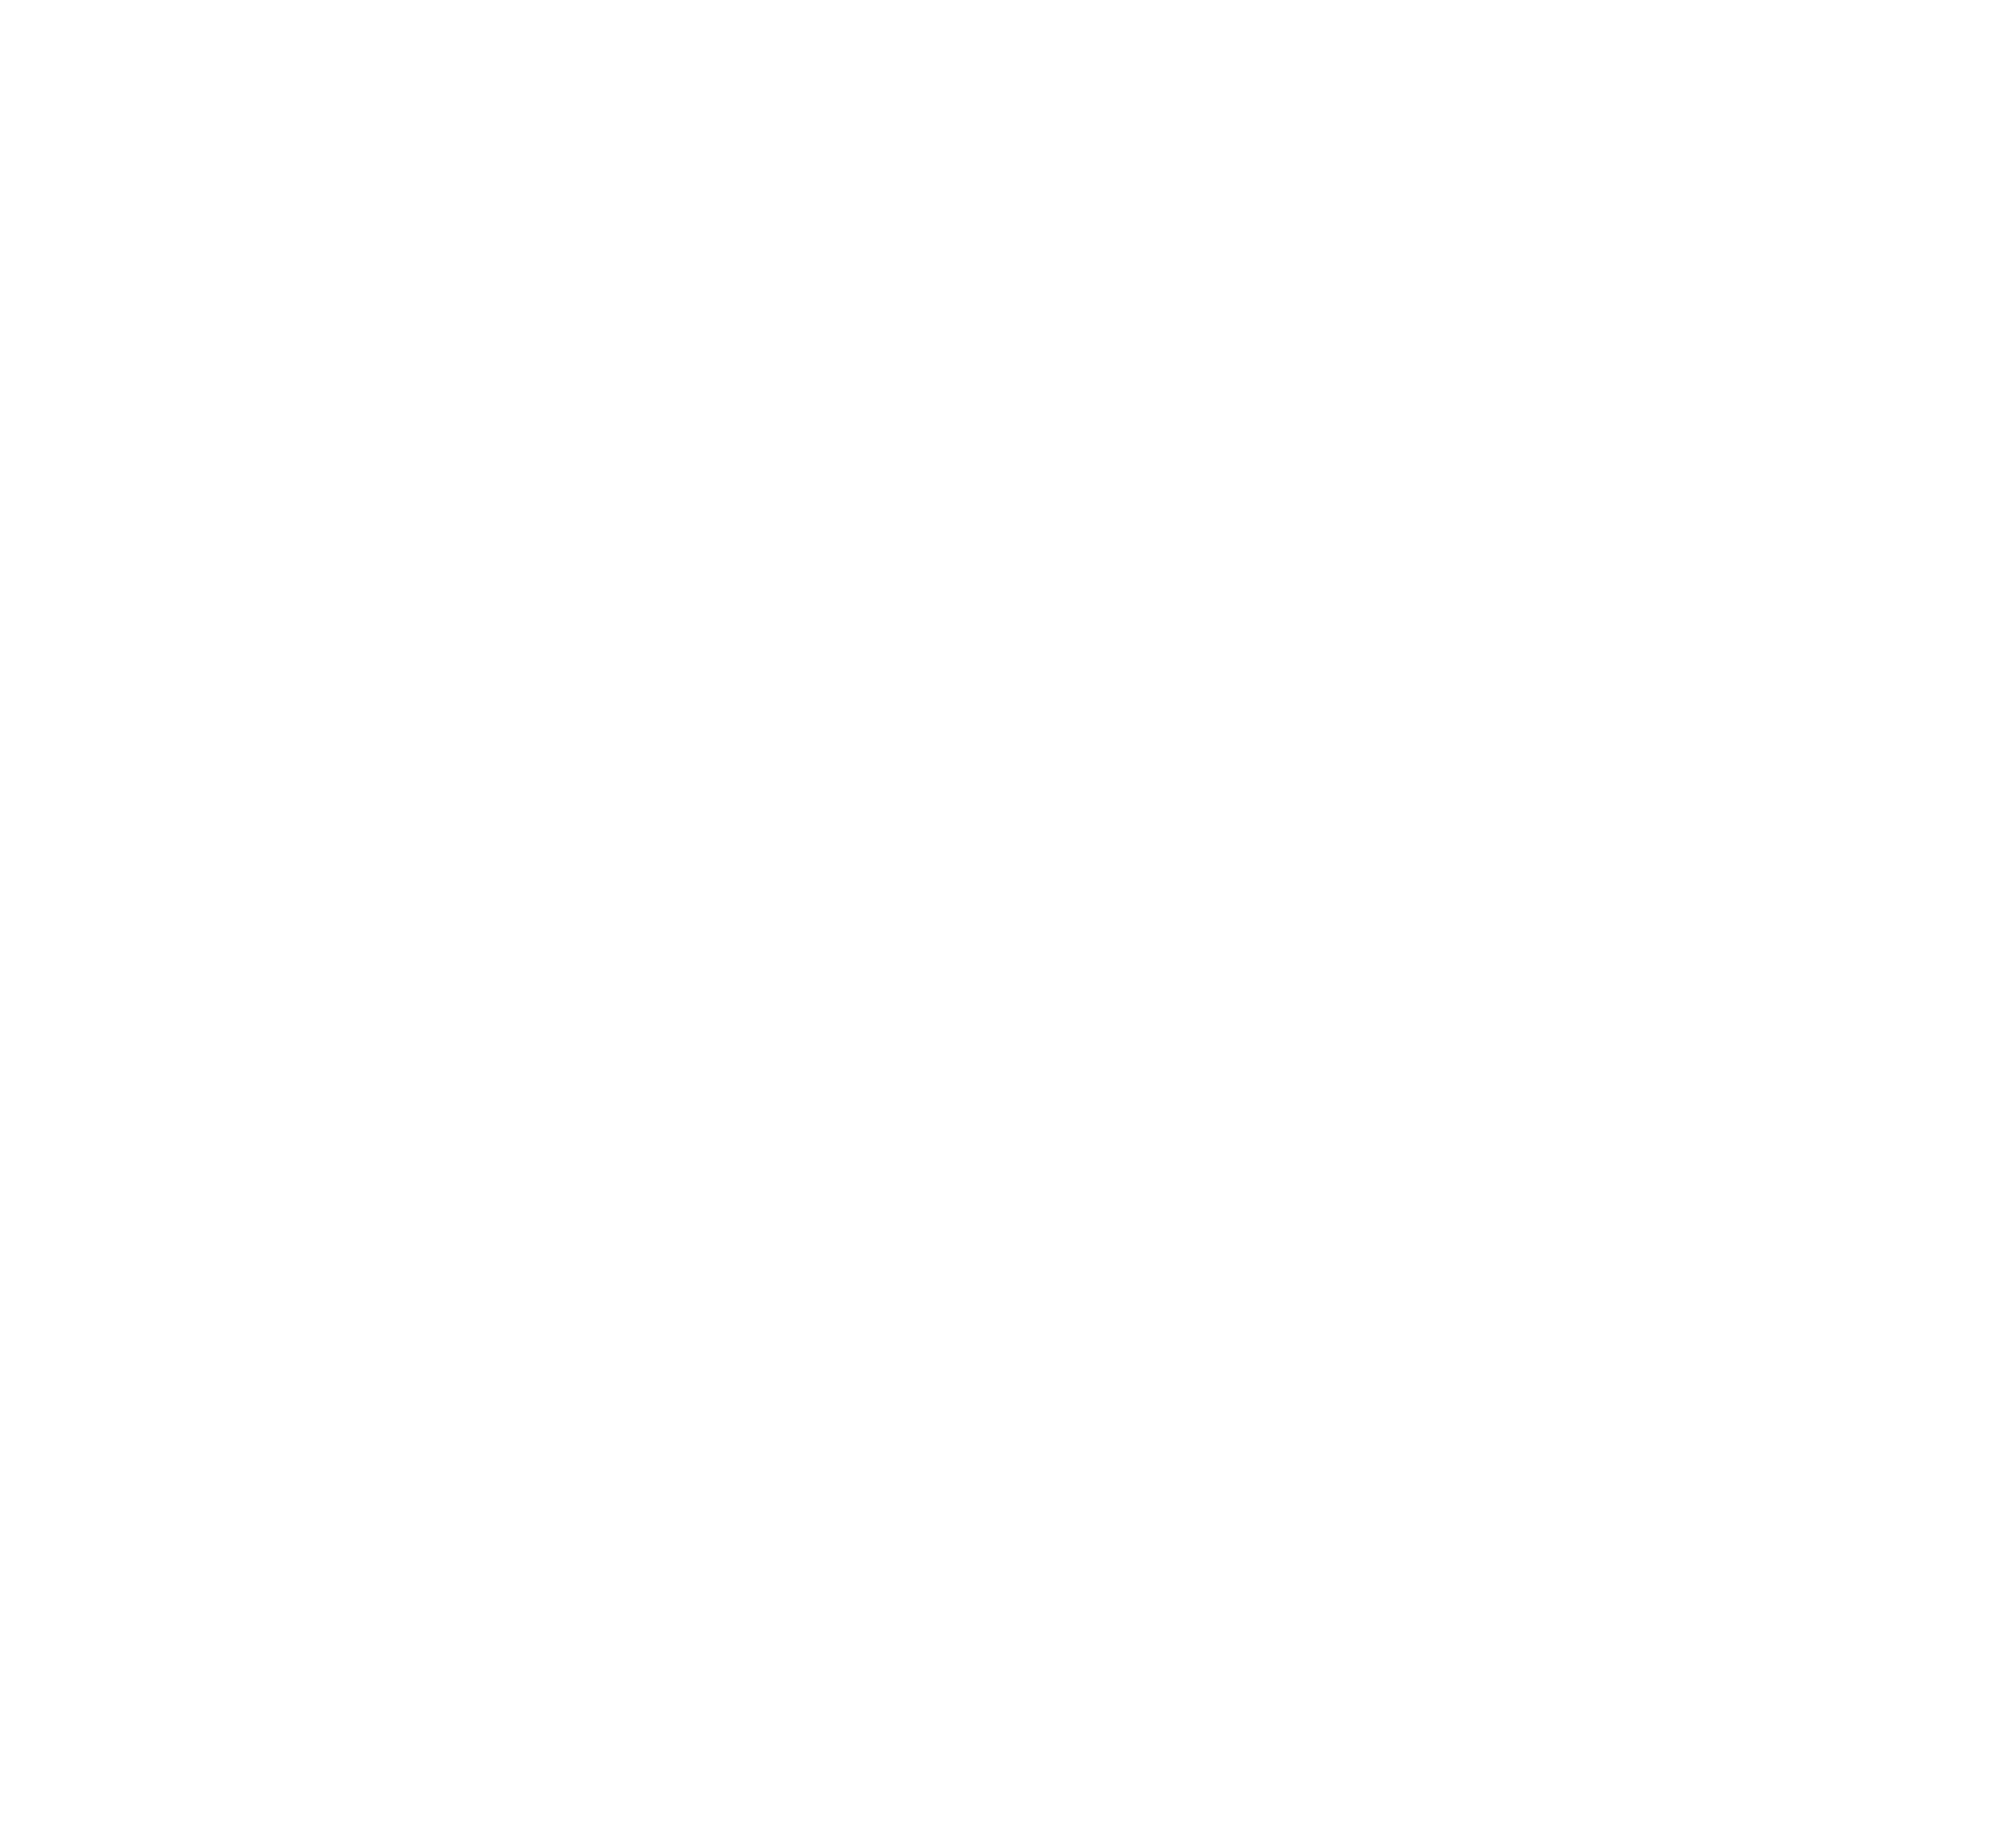 Logo JSD-01